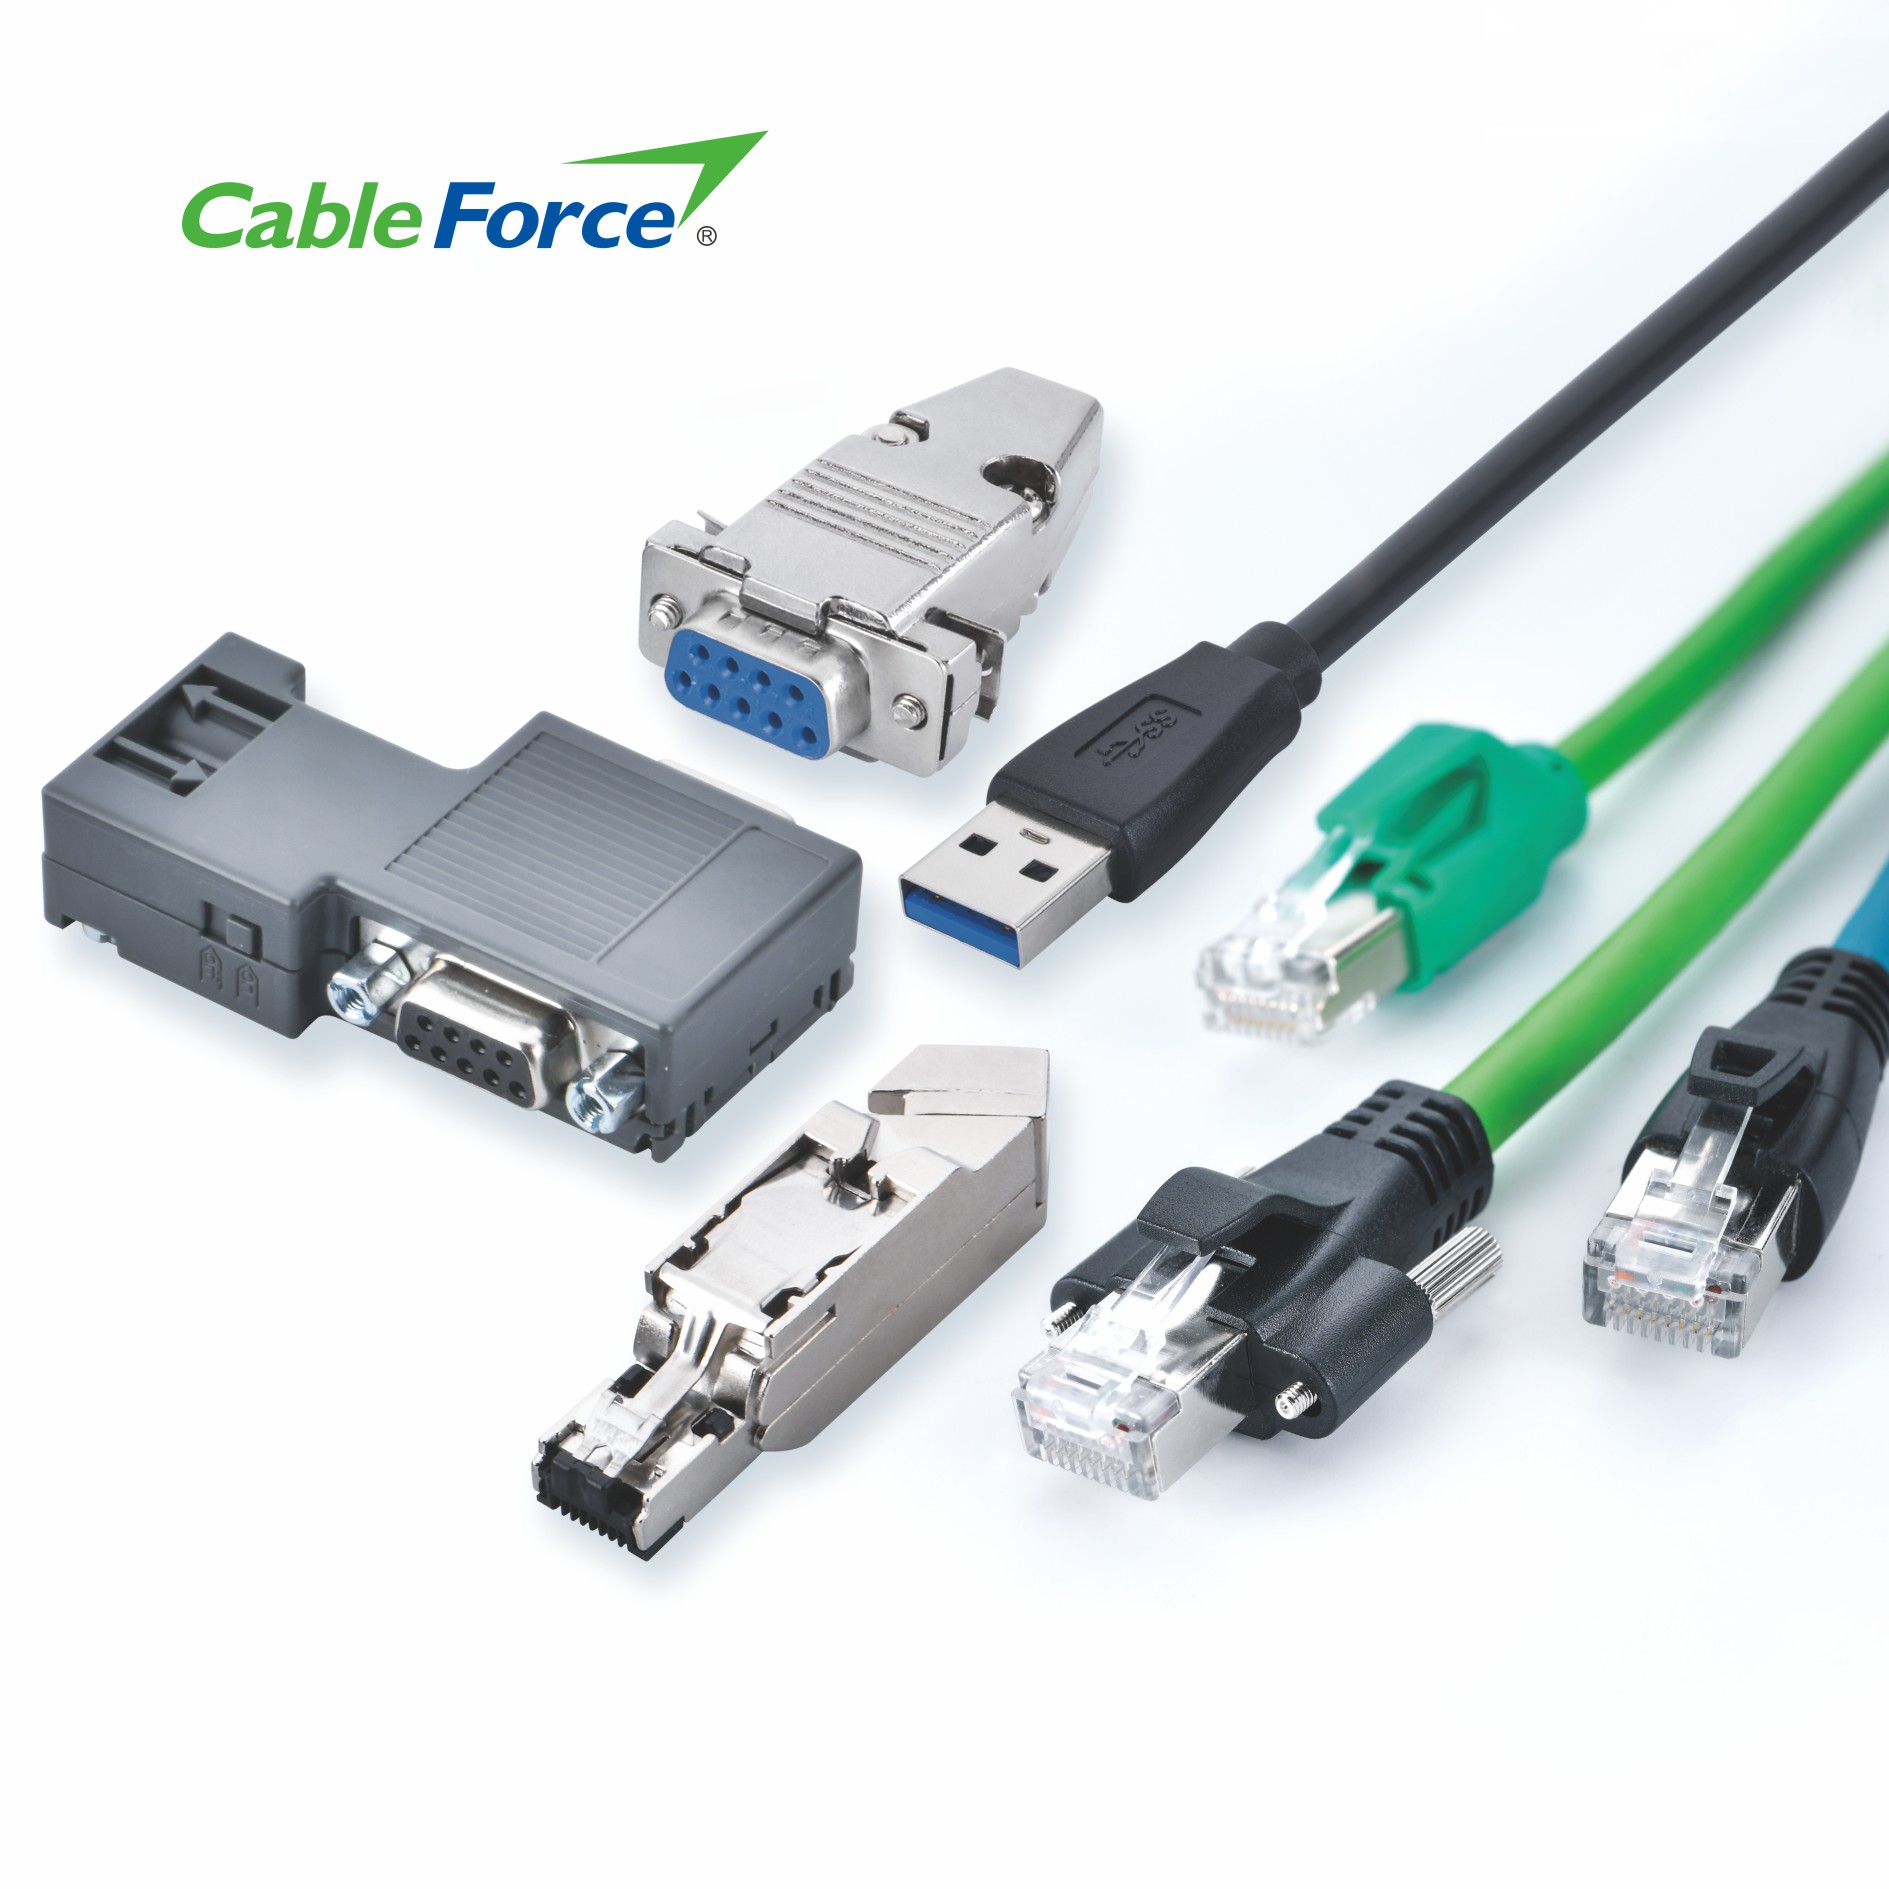 RJ45, USB, D-Sub, RS232, RS485 Cables